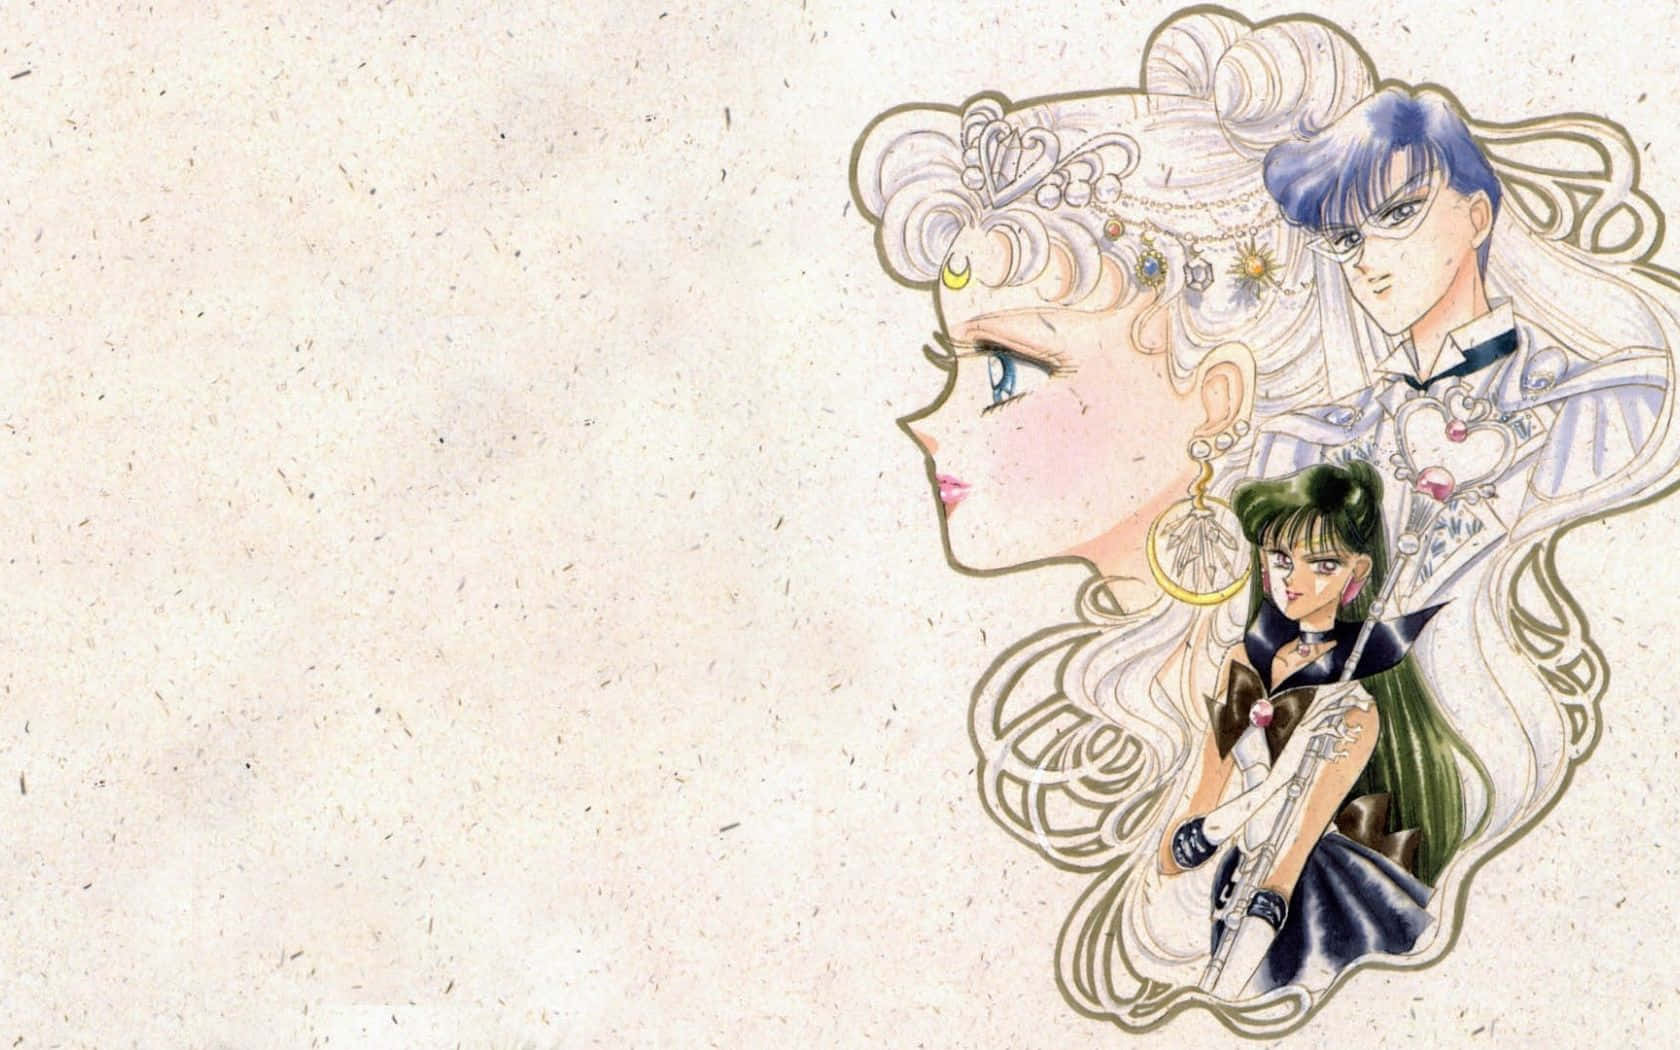 Pastelsailor Moon Sailor Pluto Anime Översättning Till Svenska: Pastell Sailor Moon Sailor Pluto Anime. Wallpaper